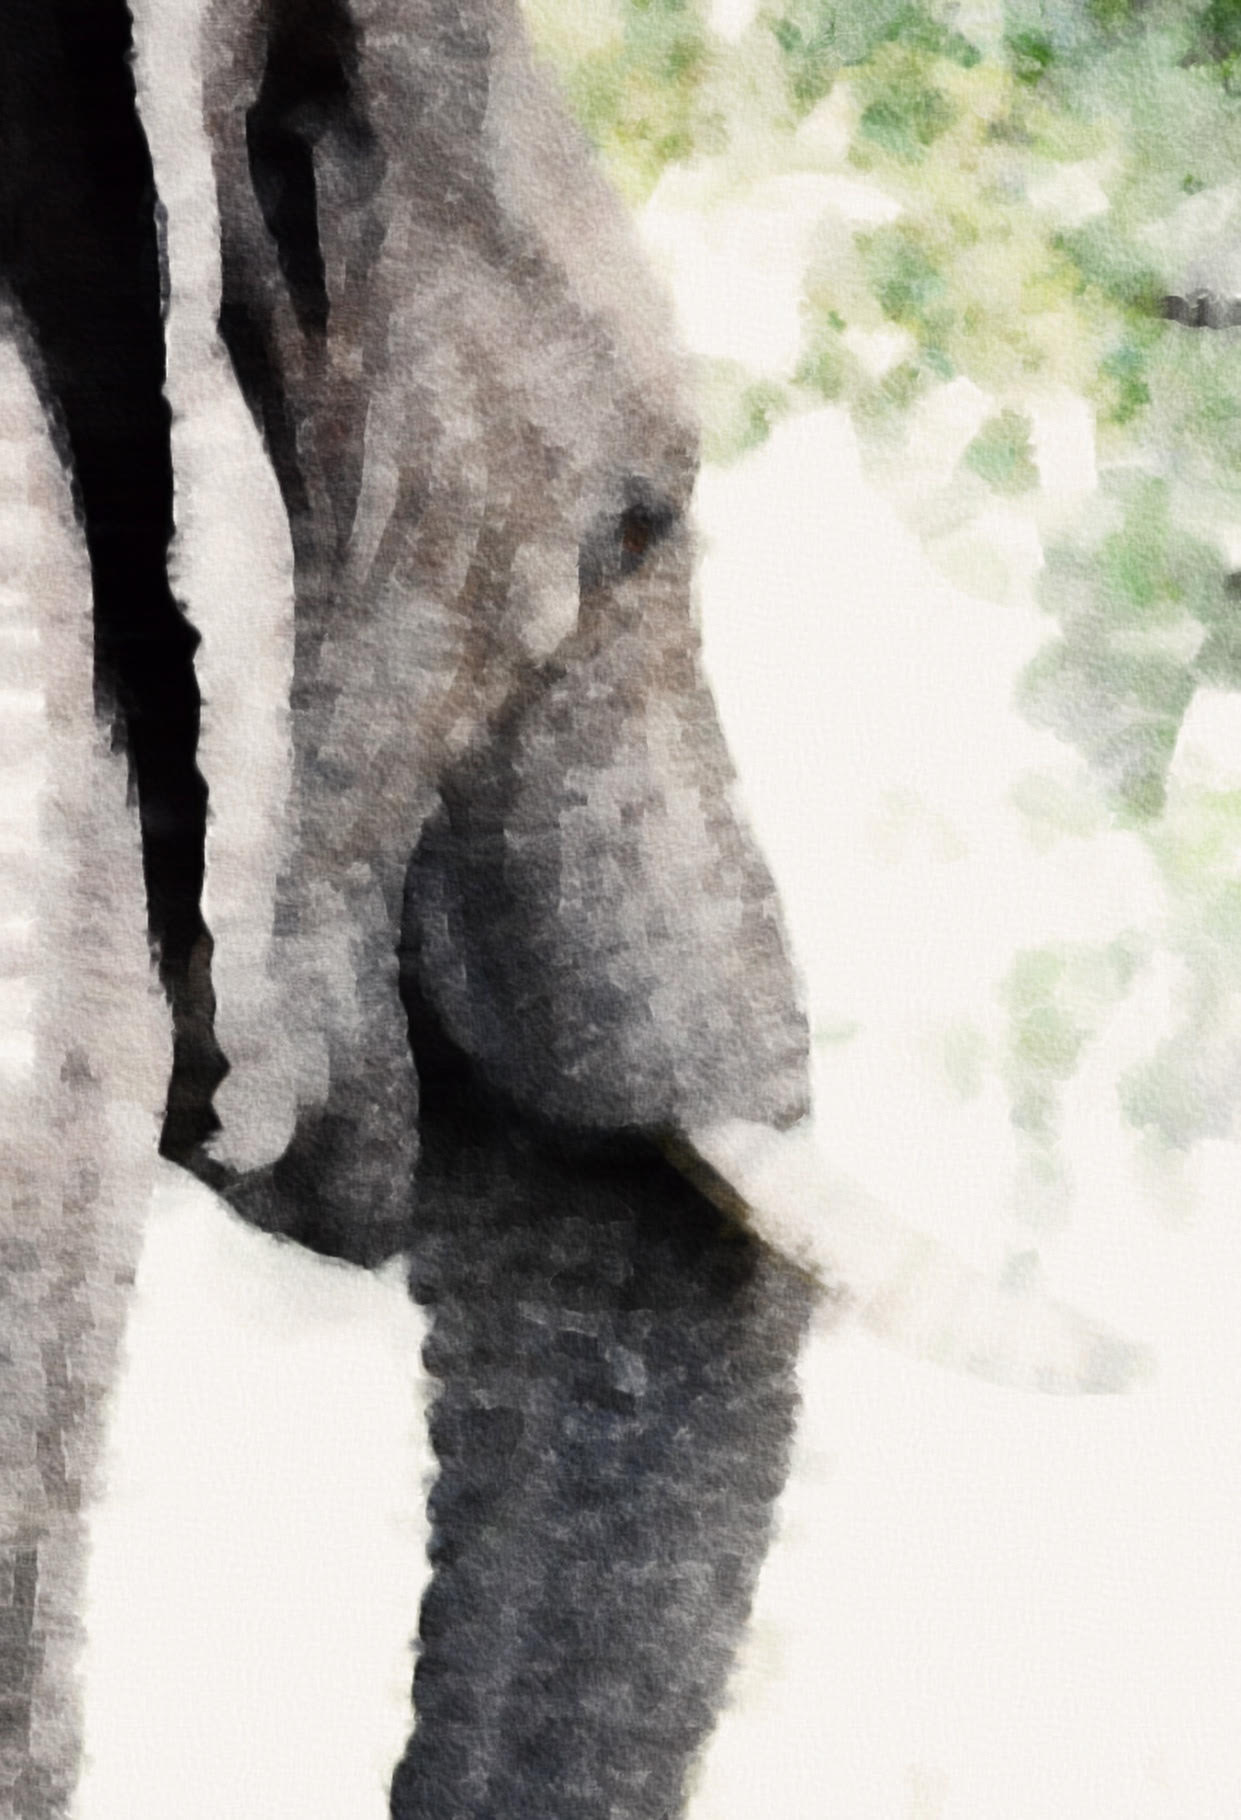 “Oh, elephant dreams, yes. I find elephant dreams